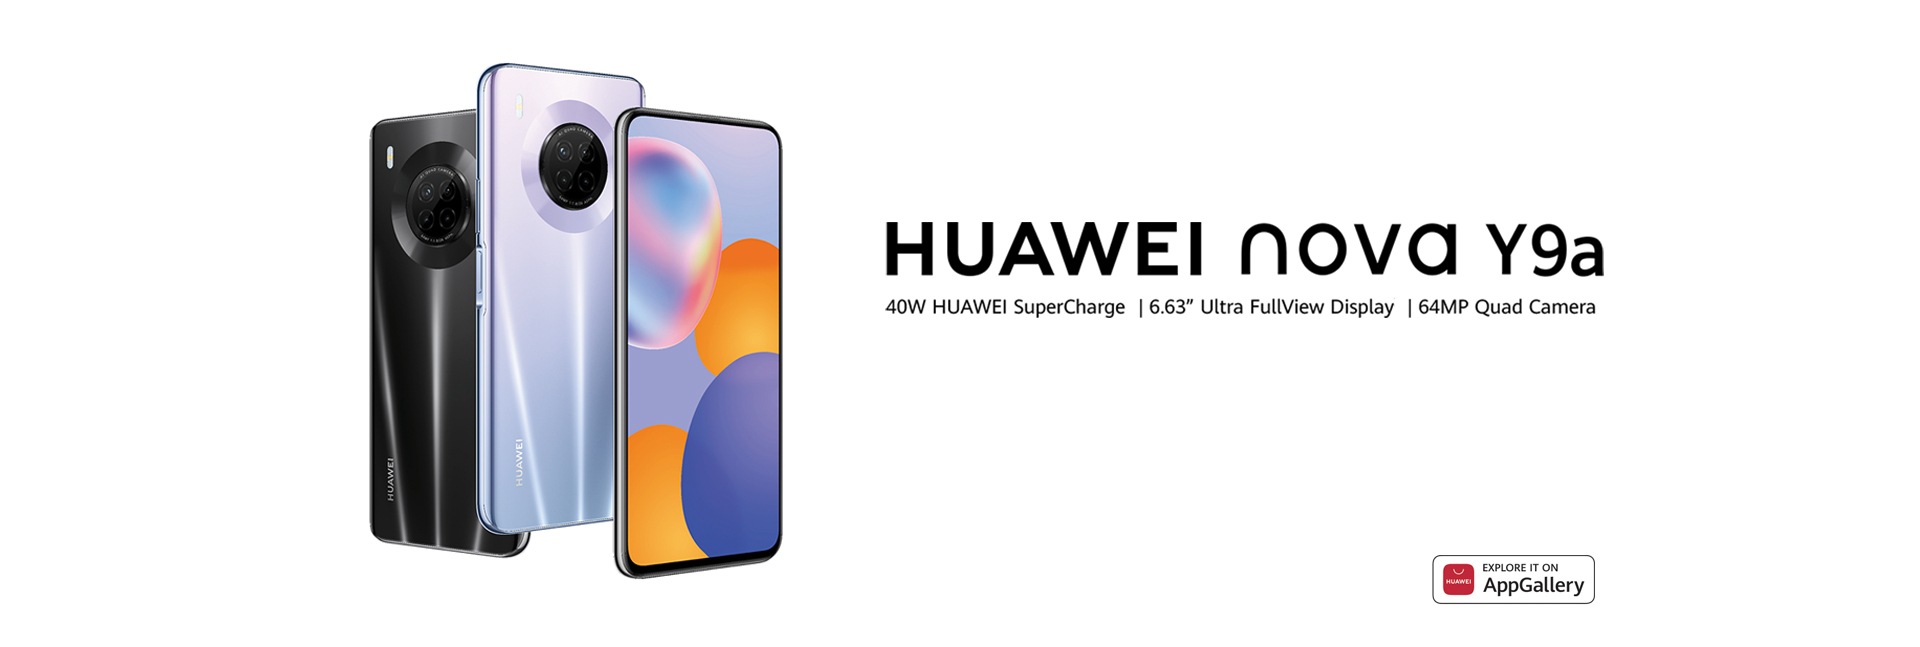 Huawei Nova y9a 1920x647